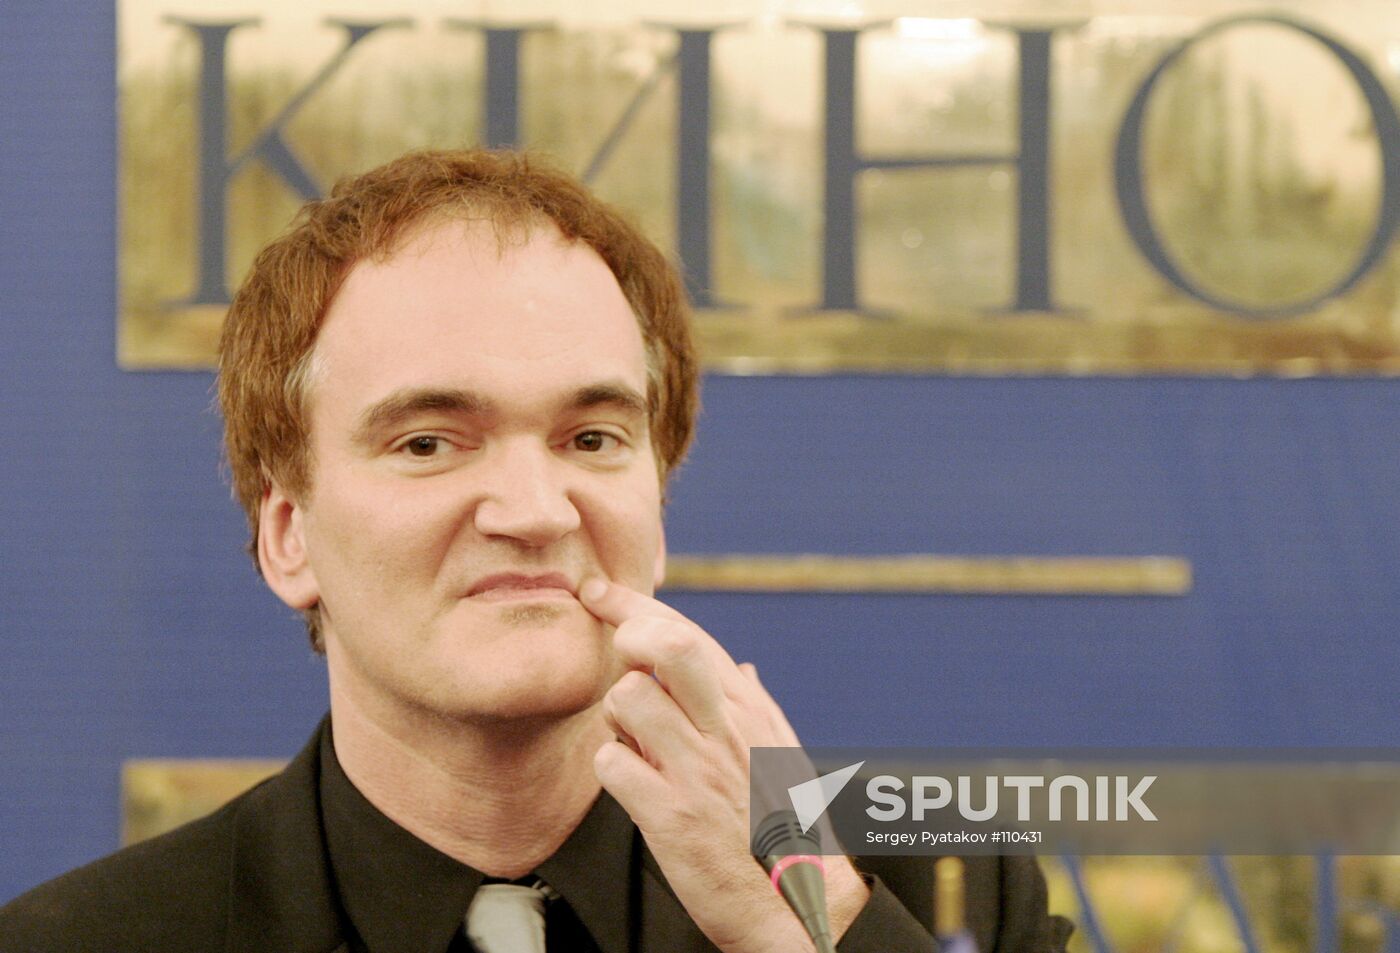 Tarantino 